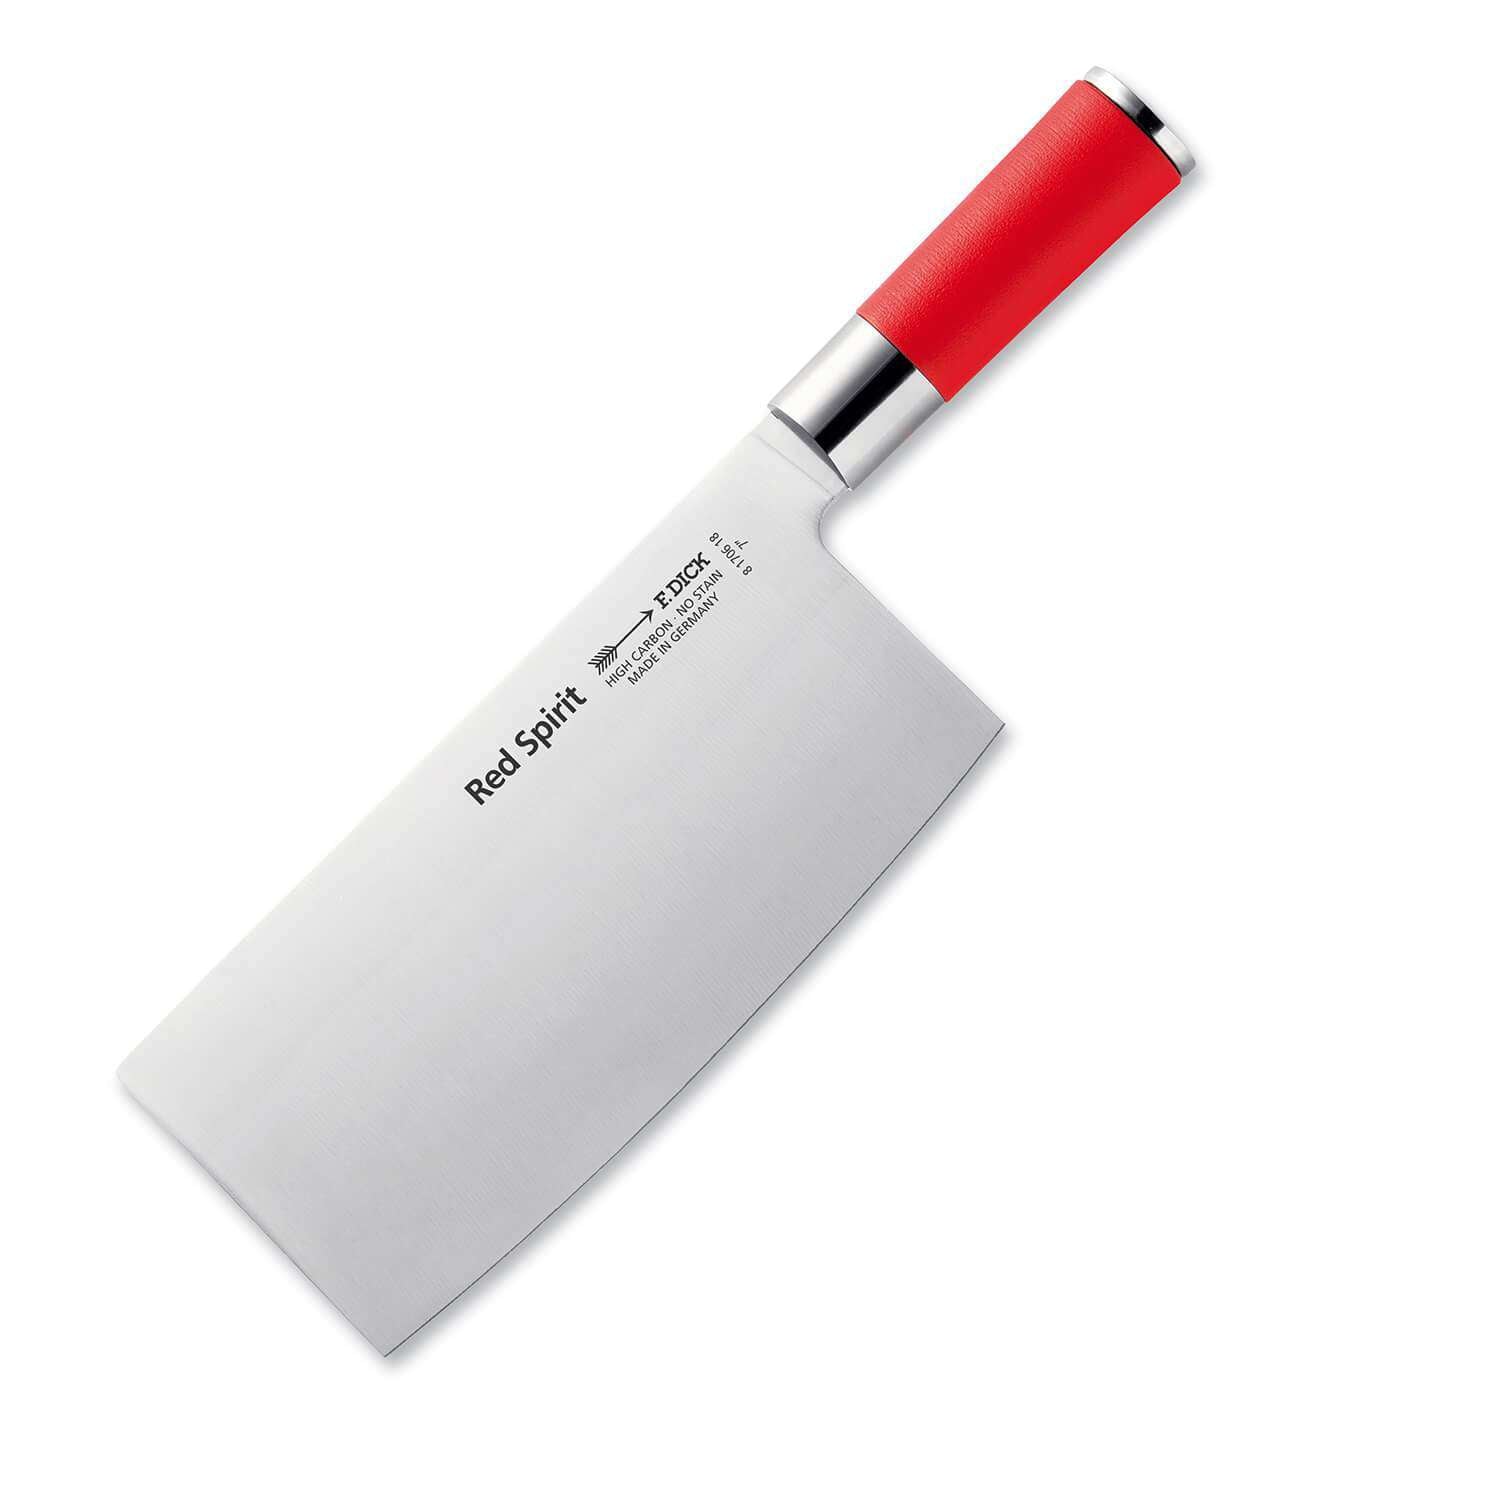 F dick. F dick ножи Red. Нож шеф повара. Китайский поварской нож. Красный нож поварской.